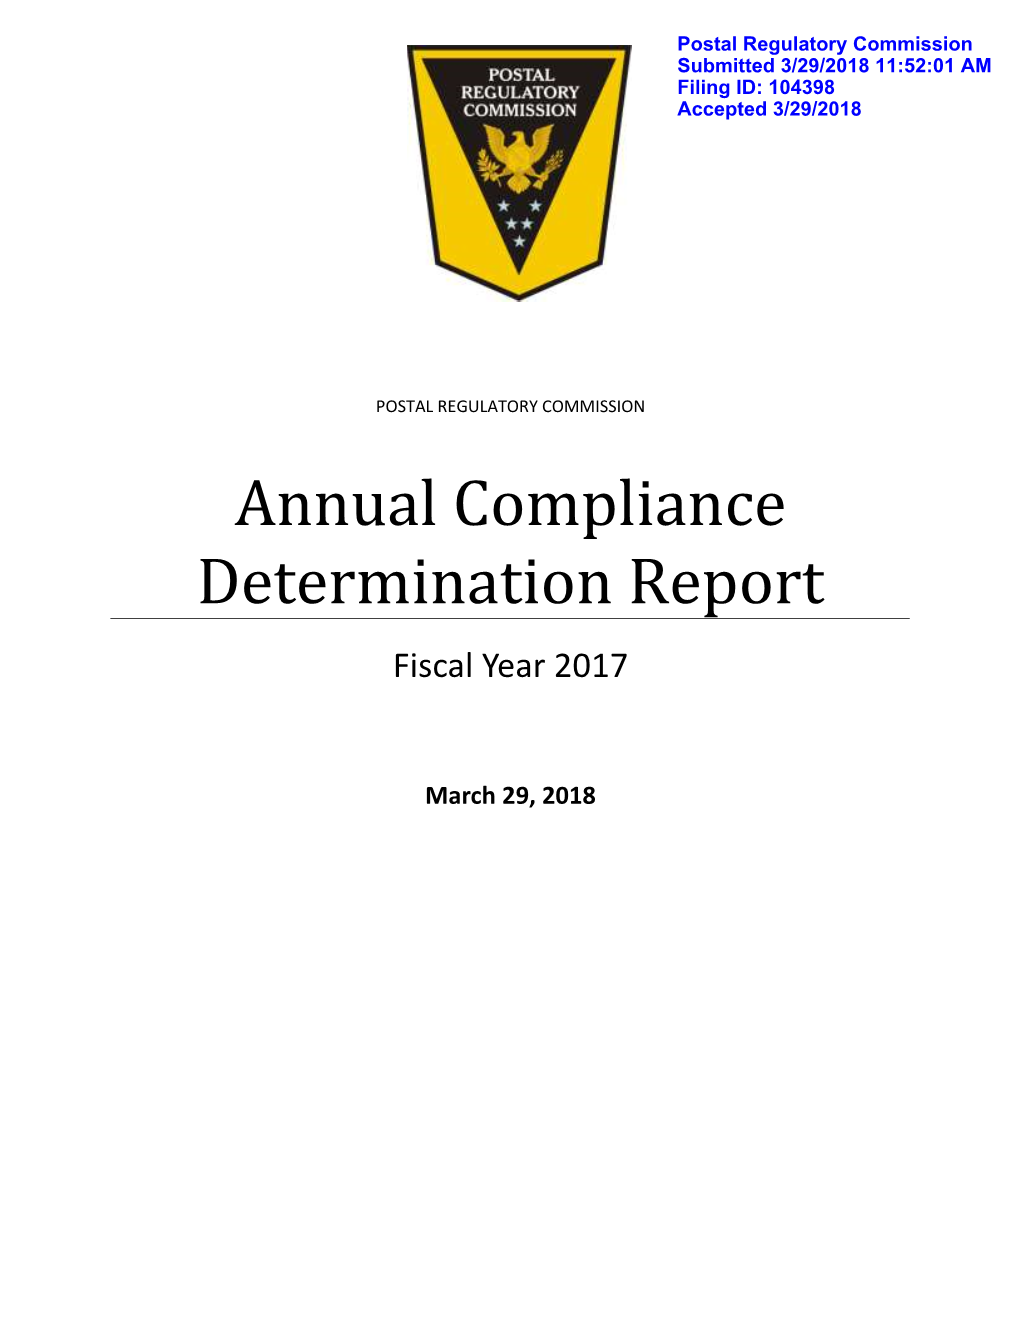 2017 Annual Compliance Determination Report